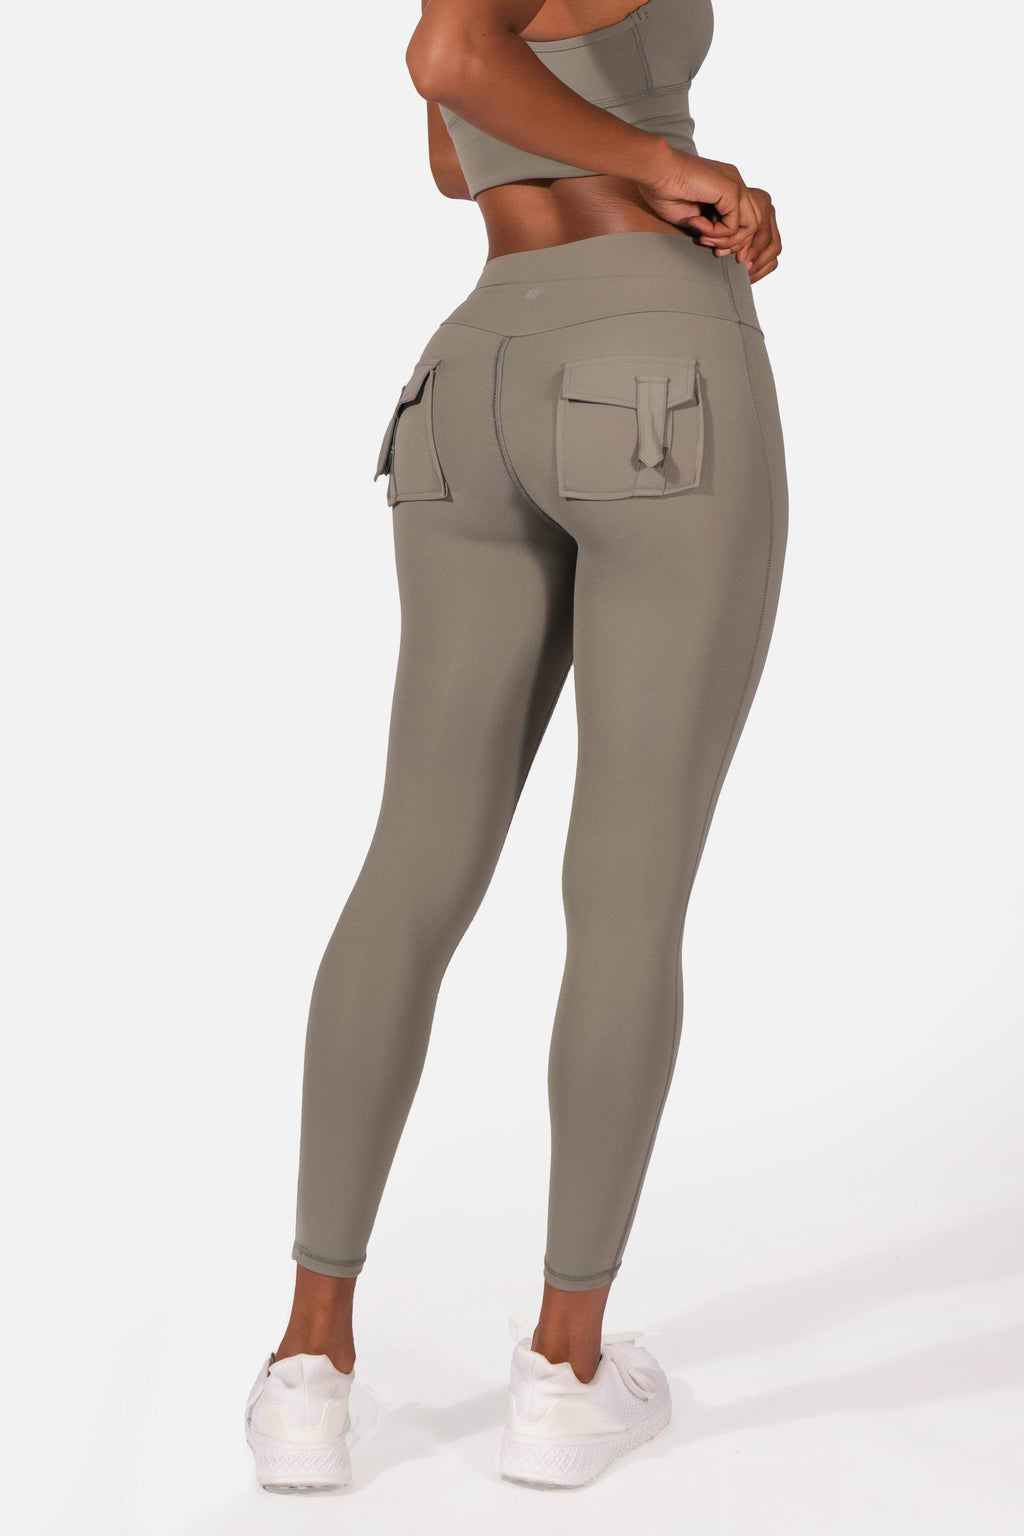 Back Pocket Butt Scrunch Leggings - Olive (4629112488003)